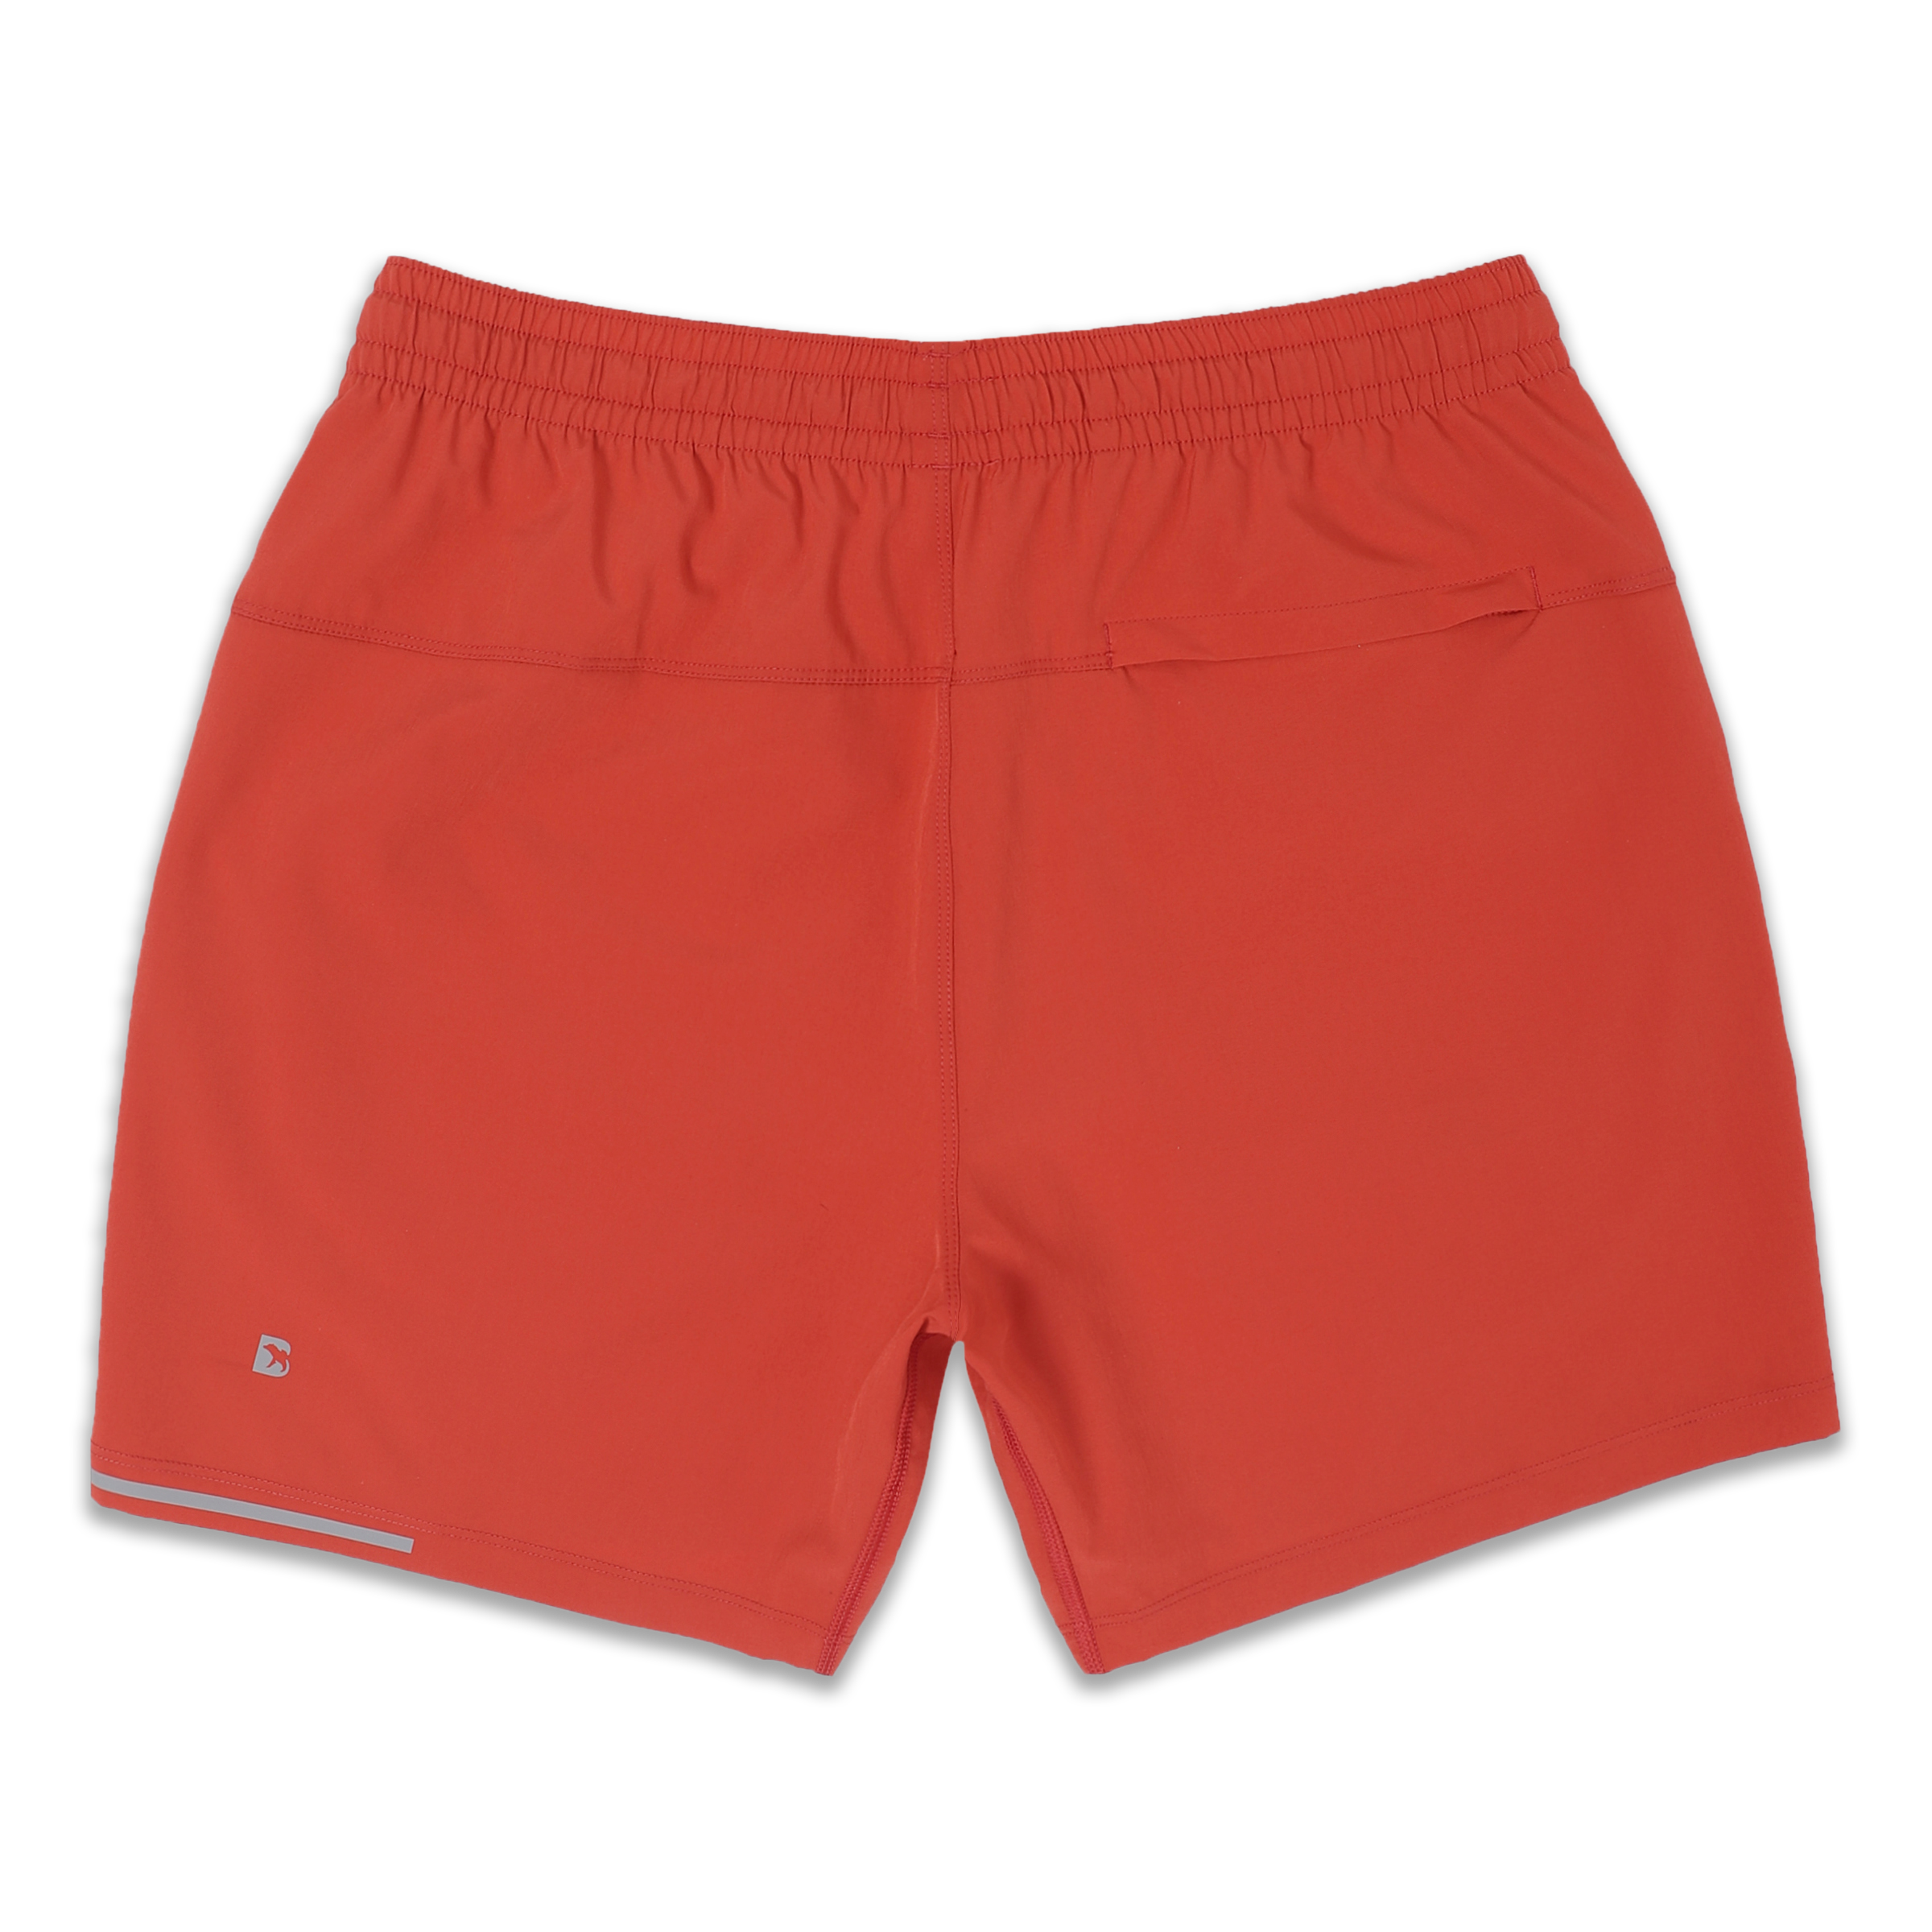 Run Short 5.5" Coral back with elastic waistband, back right hidden zipper pocket, reflective line on bottom left hem, and reflective Bear B logo on bottom left leg